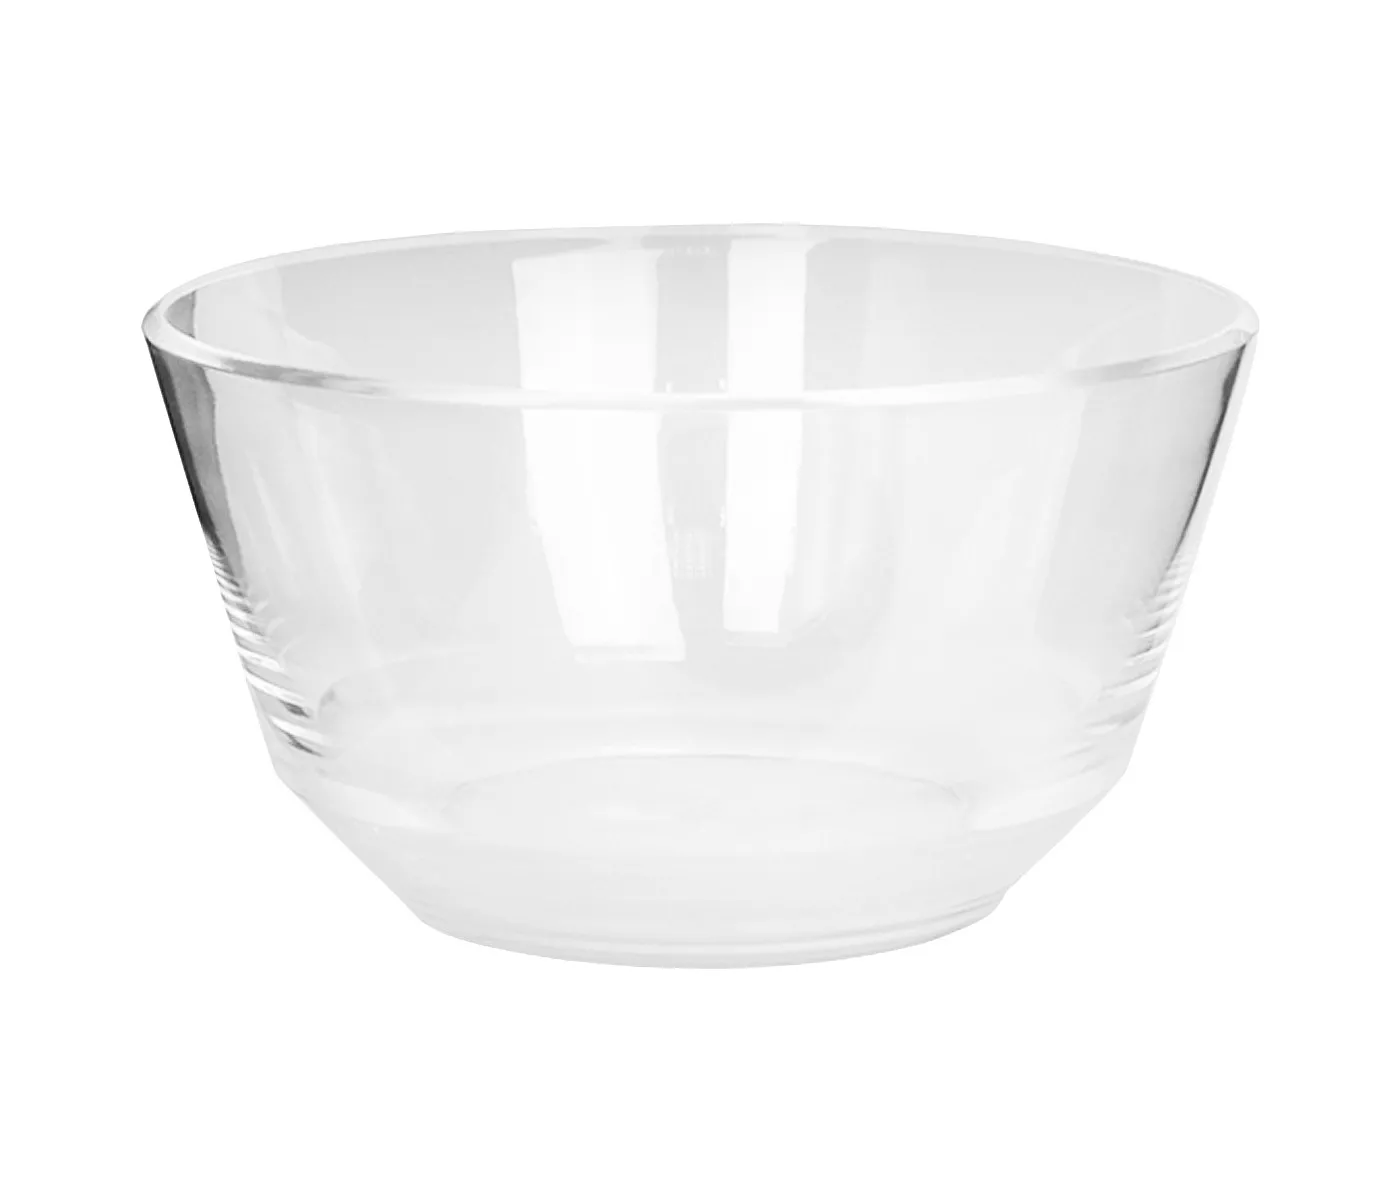 115oz Plastic Serving Bowl - Room Essentials™ - image 1 of 4